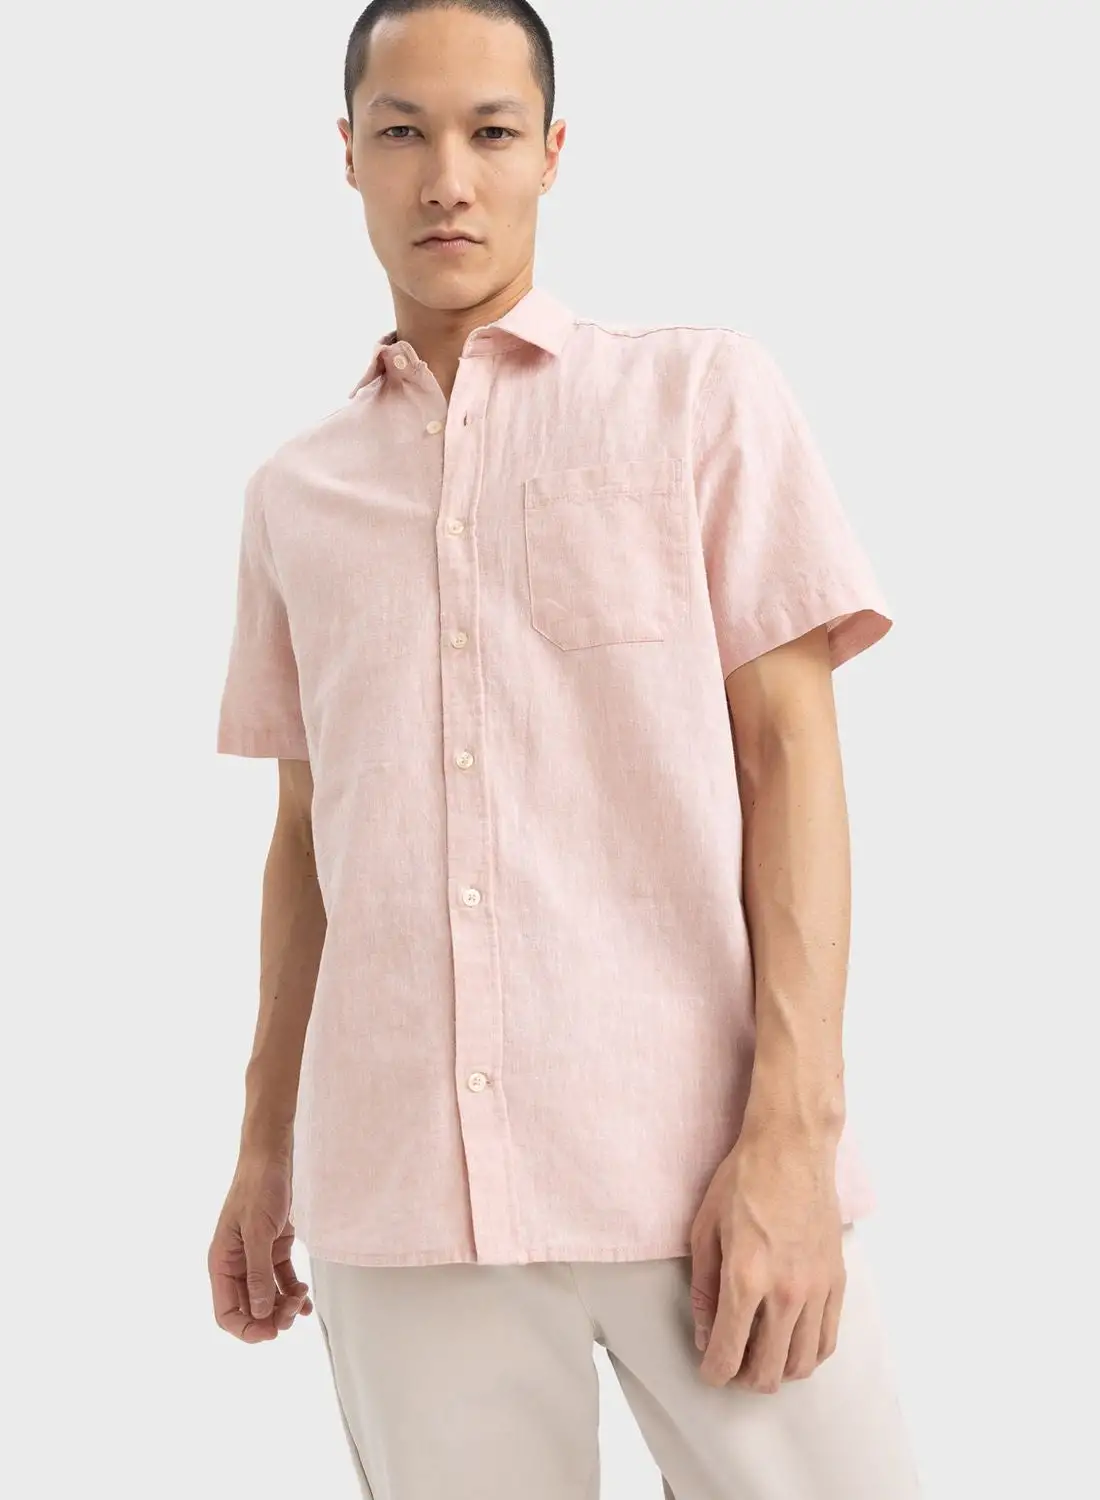 DeFacto Essential Slim Fit Shirt